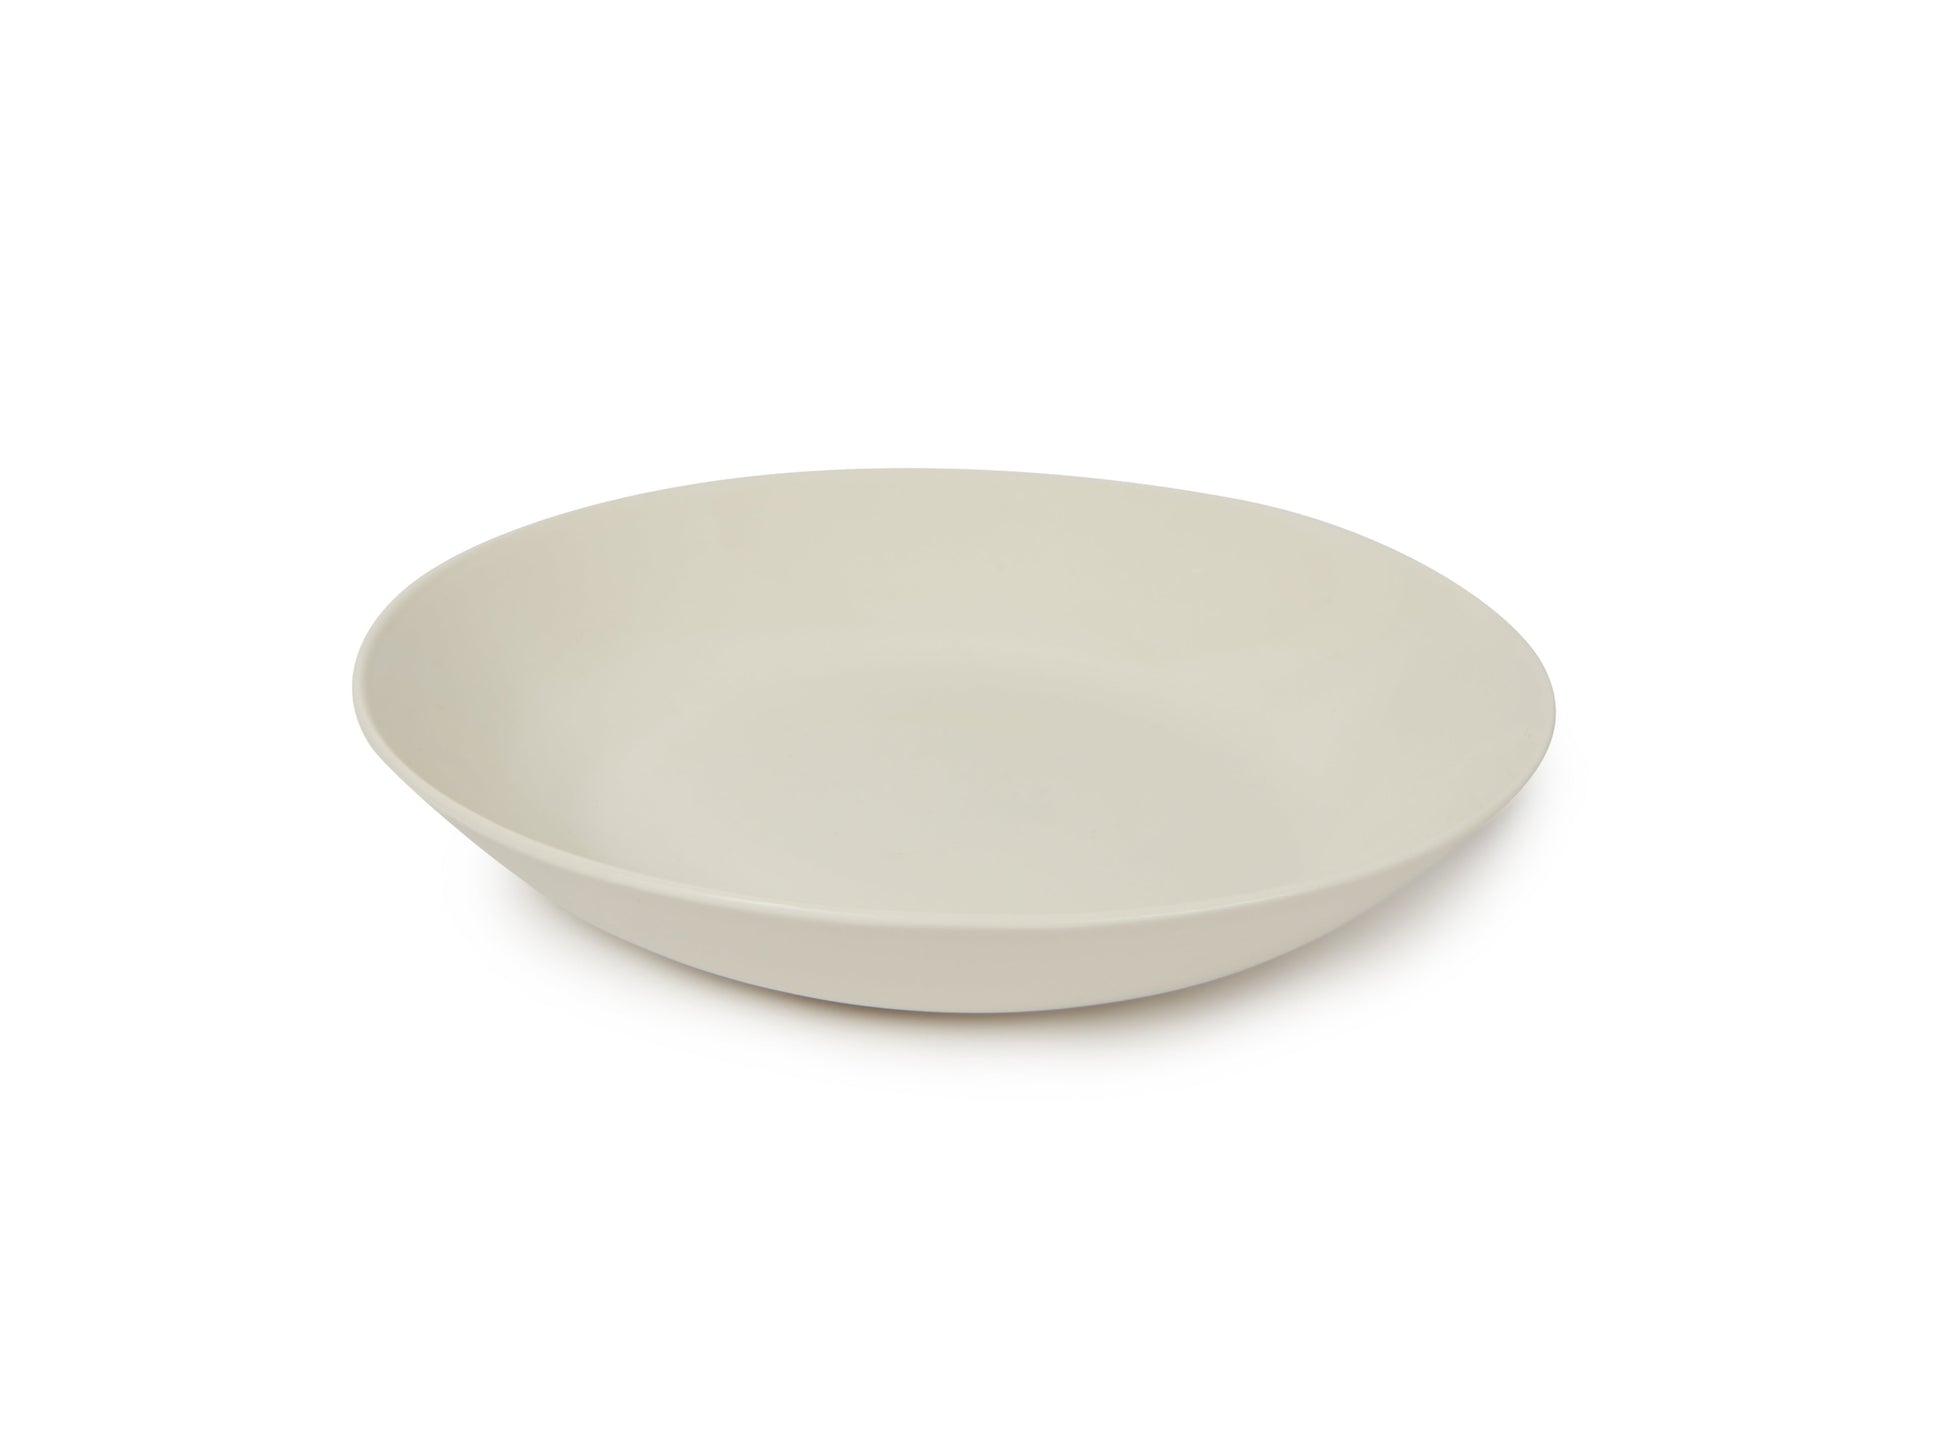 Light Gray Onda Soup/Pasta Plate - Bianco